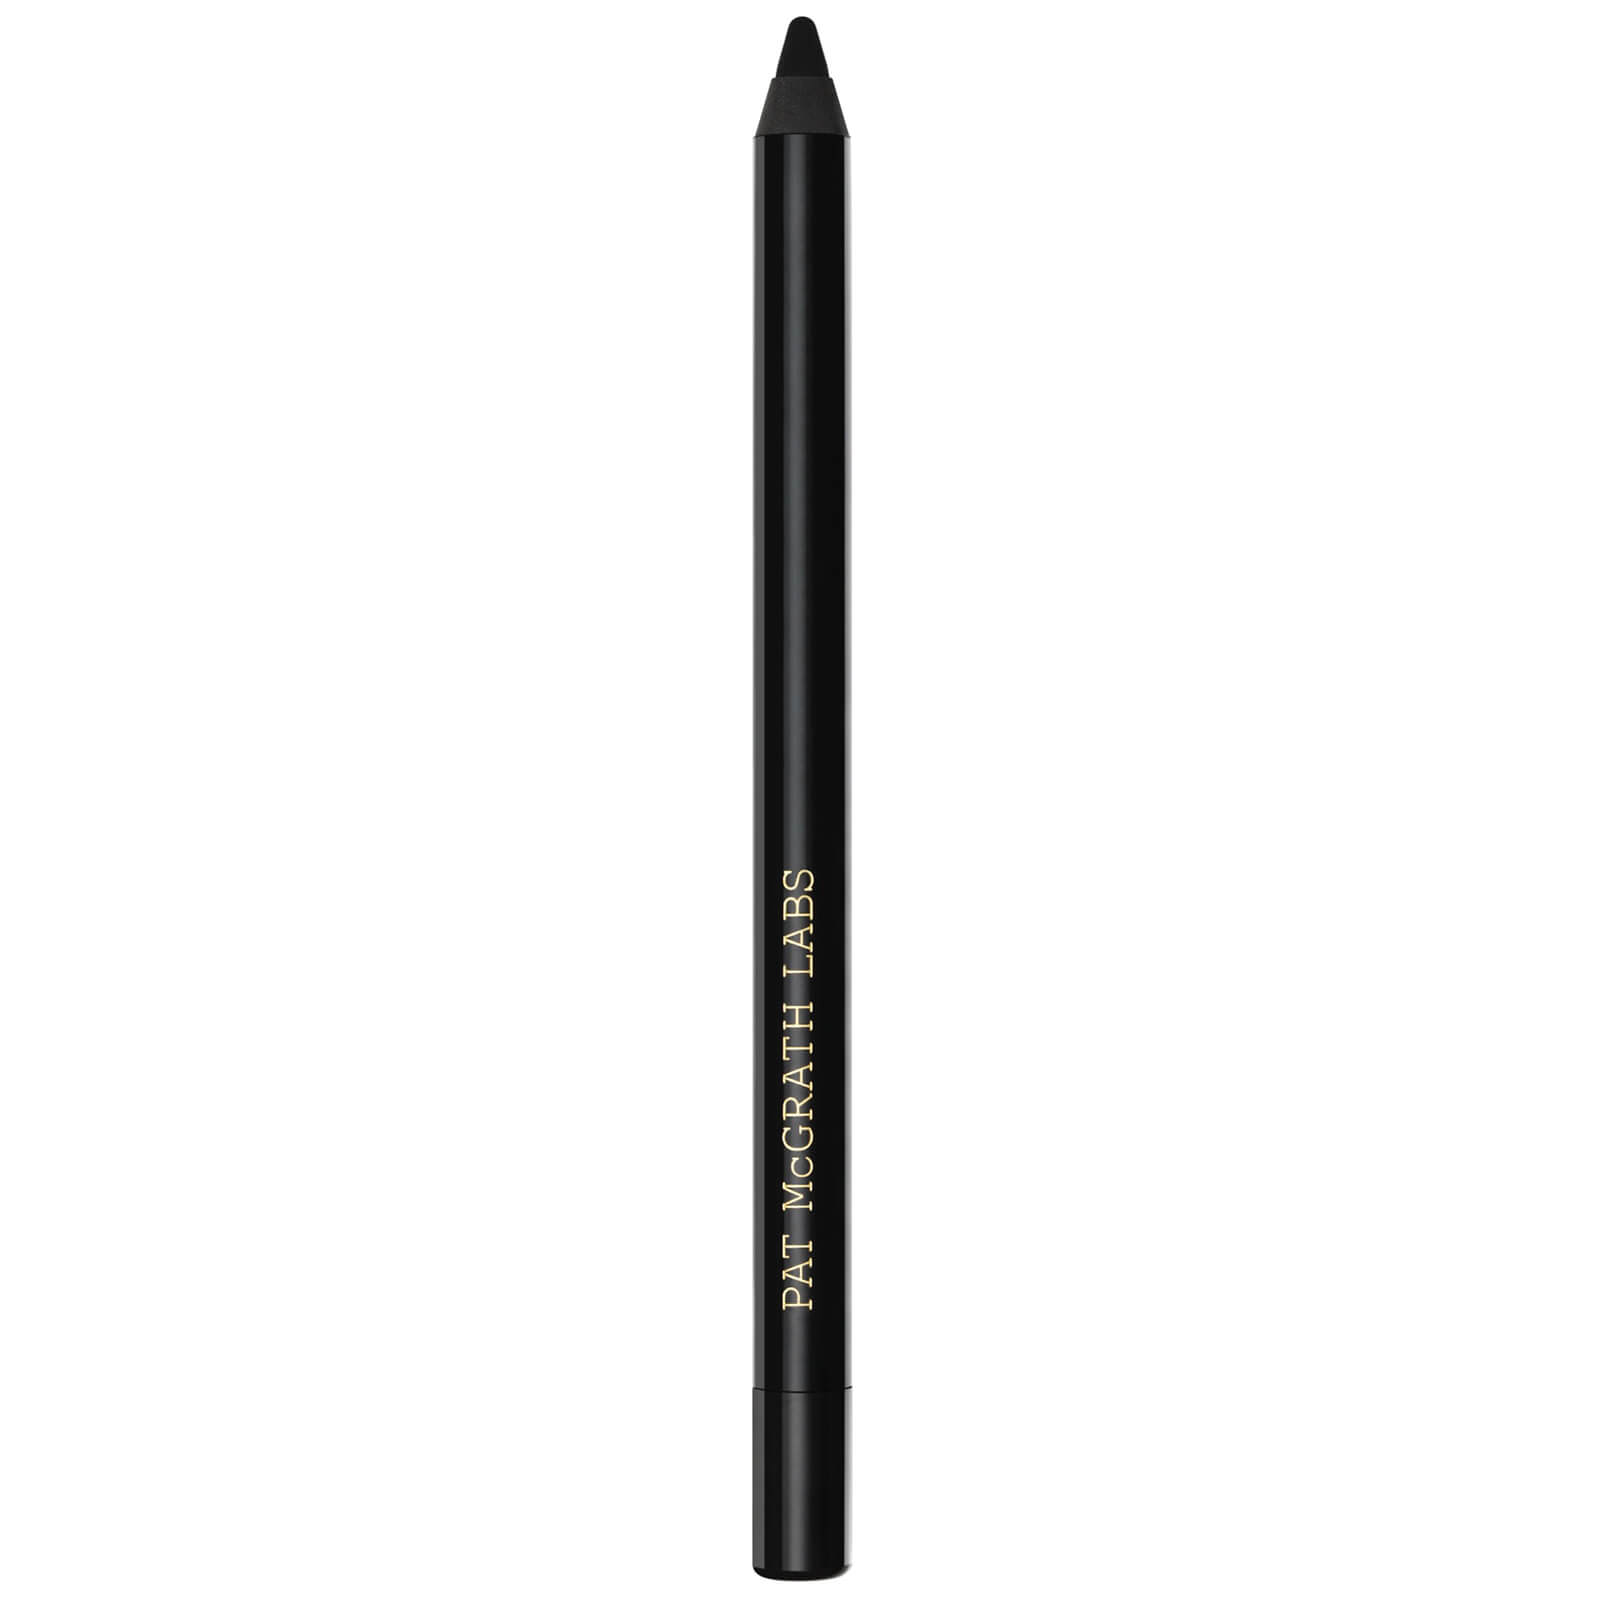 Pat Mcgrath Labs Permagel Ultra Eye Pencil 1.2g (various Shades) - Xtreme Black